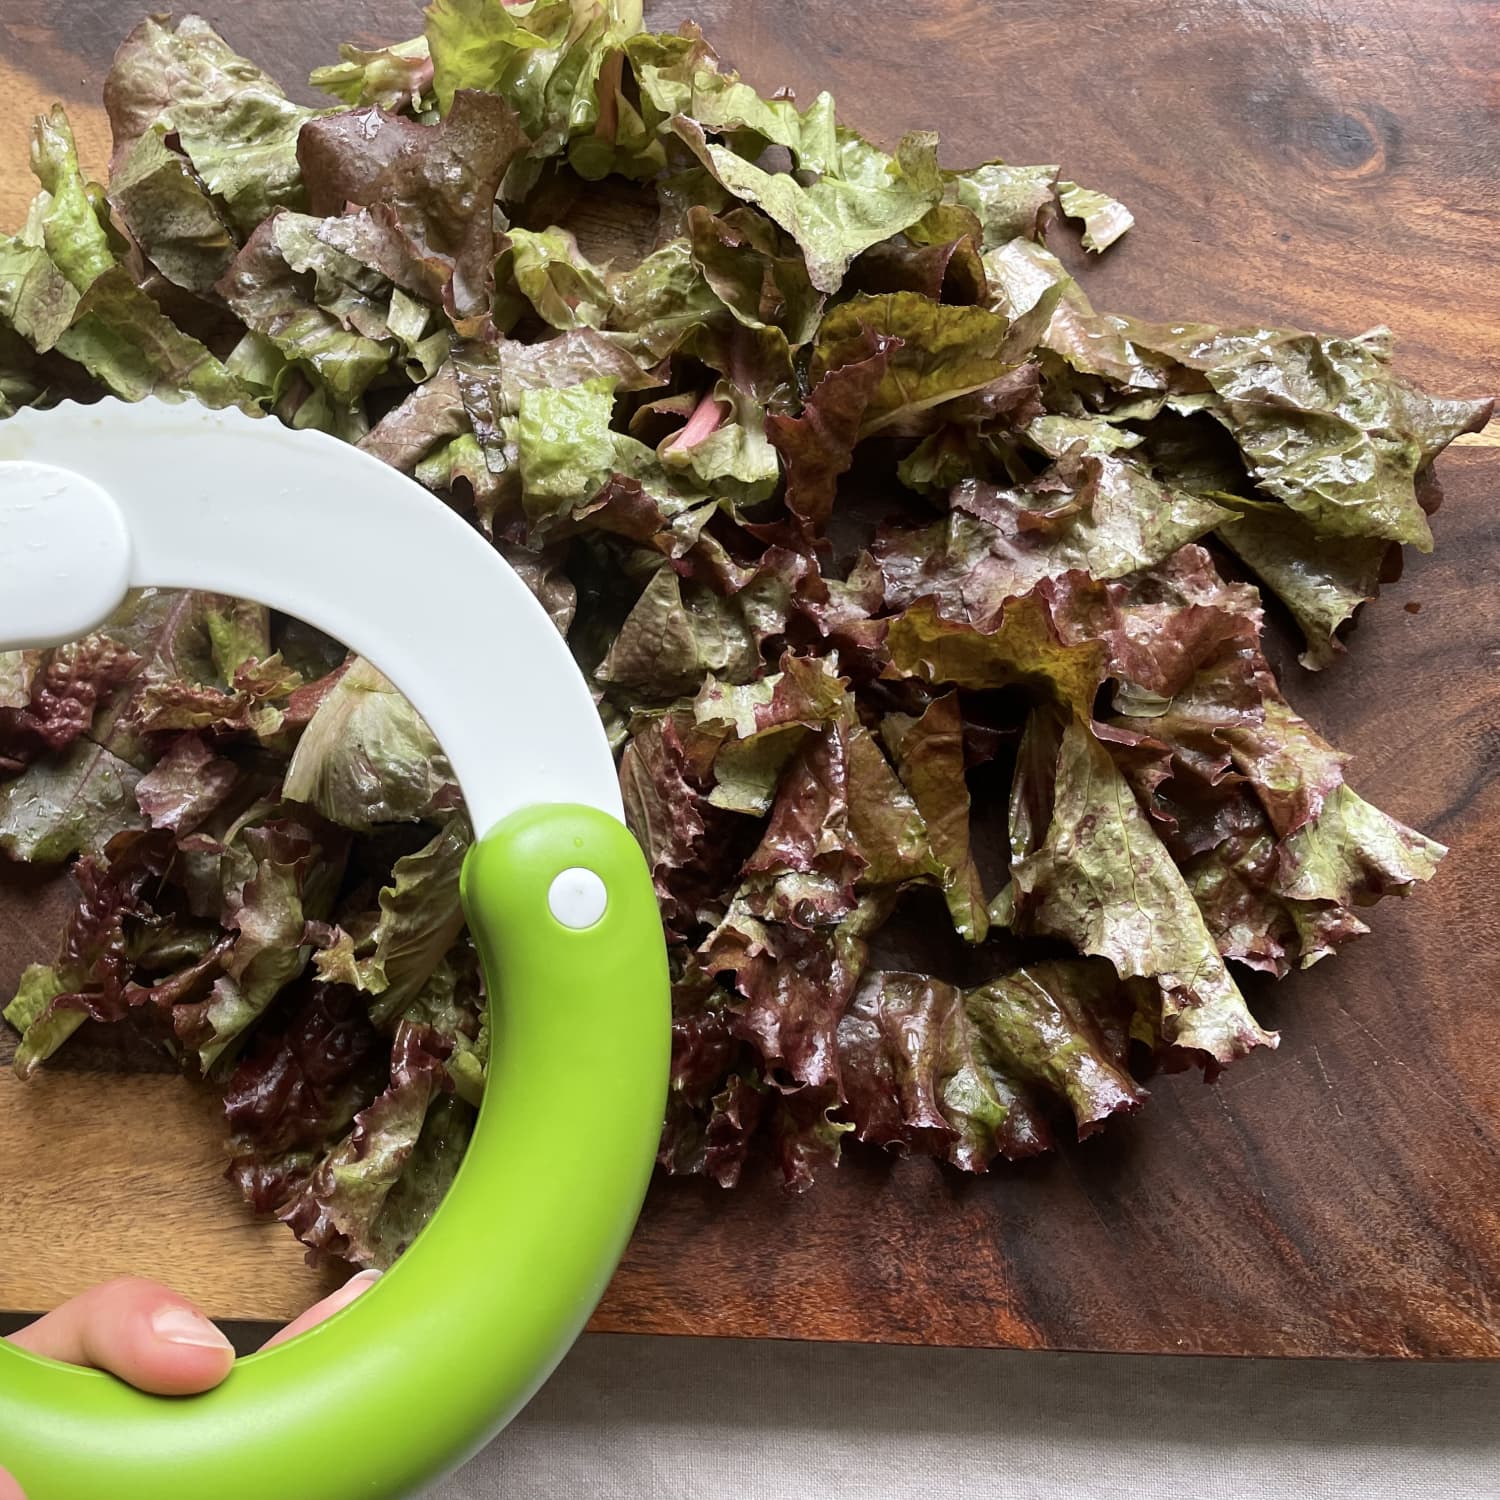 Chef’n Saladshears Salad Chopper